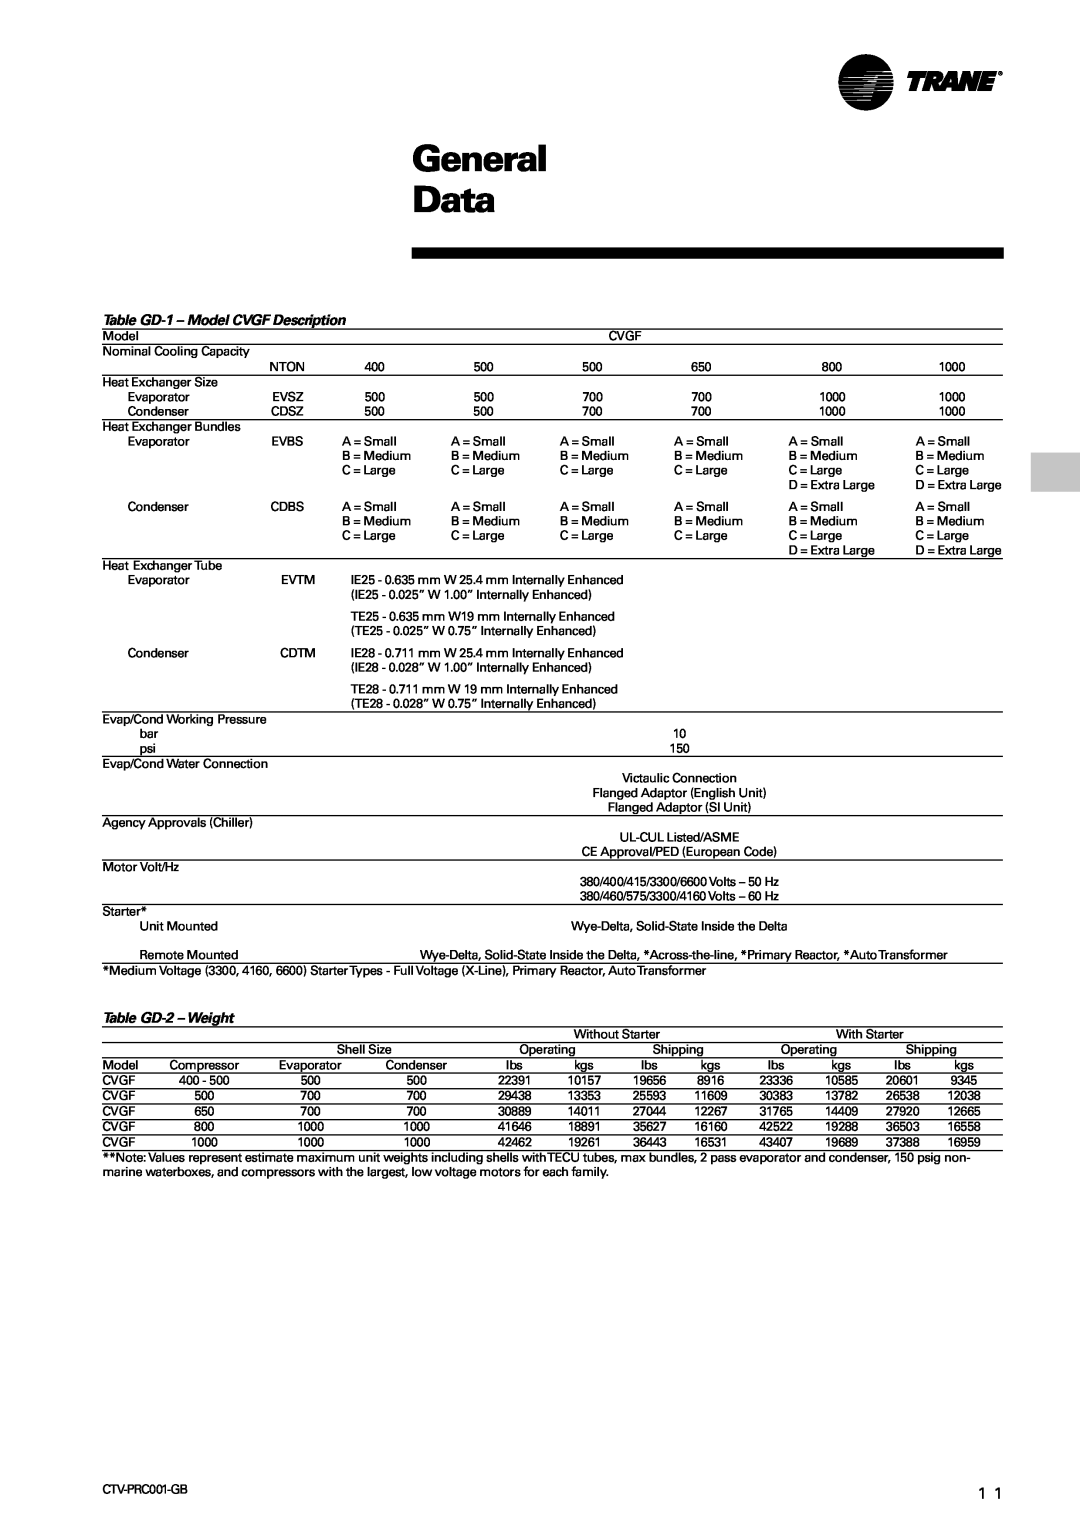 Trane manual General Data, Table GD-1- Model CVGF Description, Table GD-2- Weight 